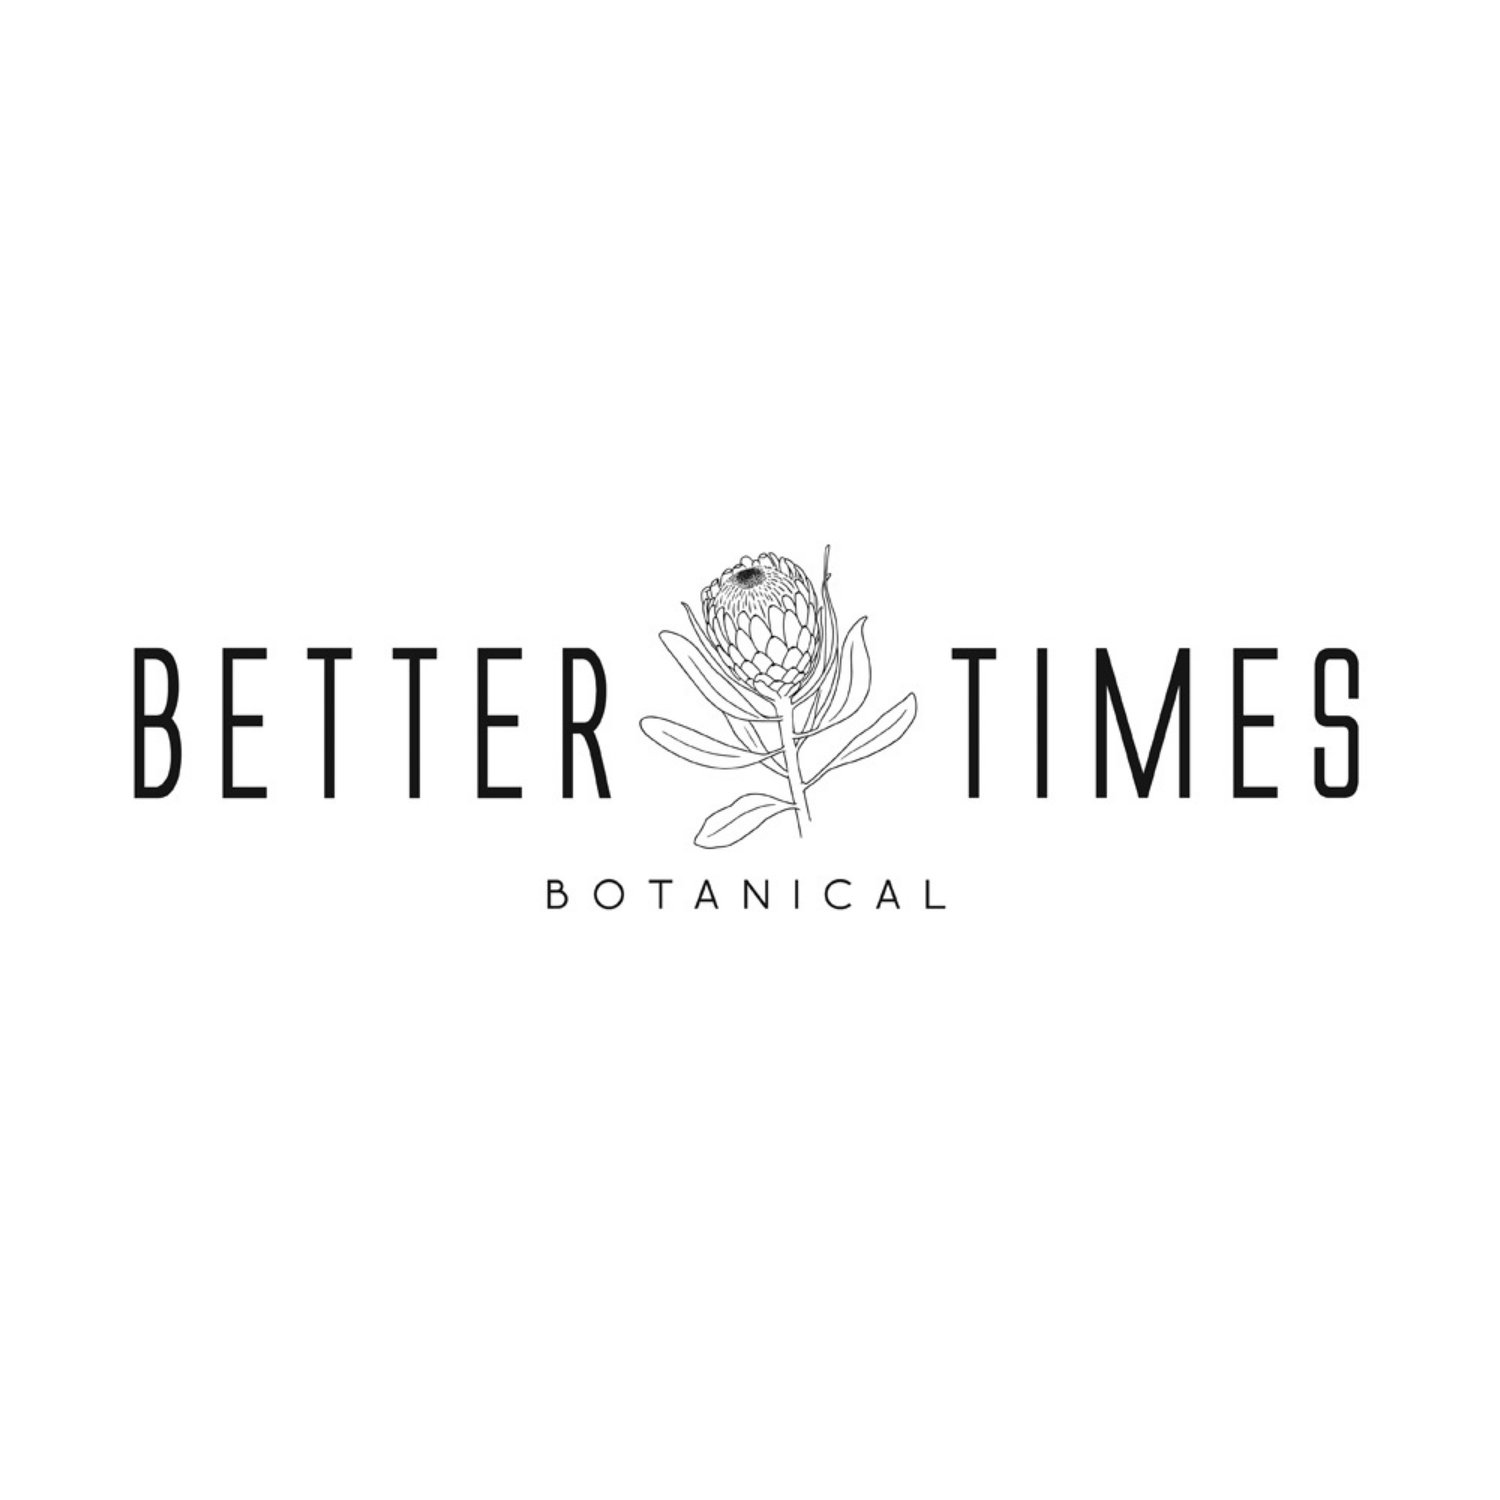 Better Times Botanical